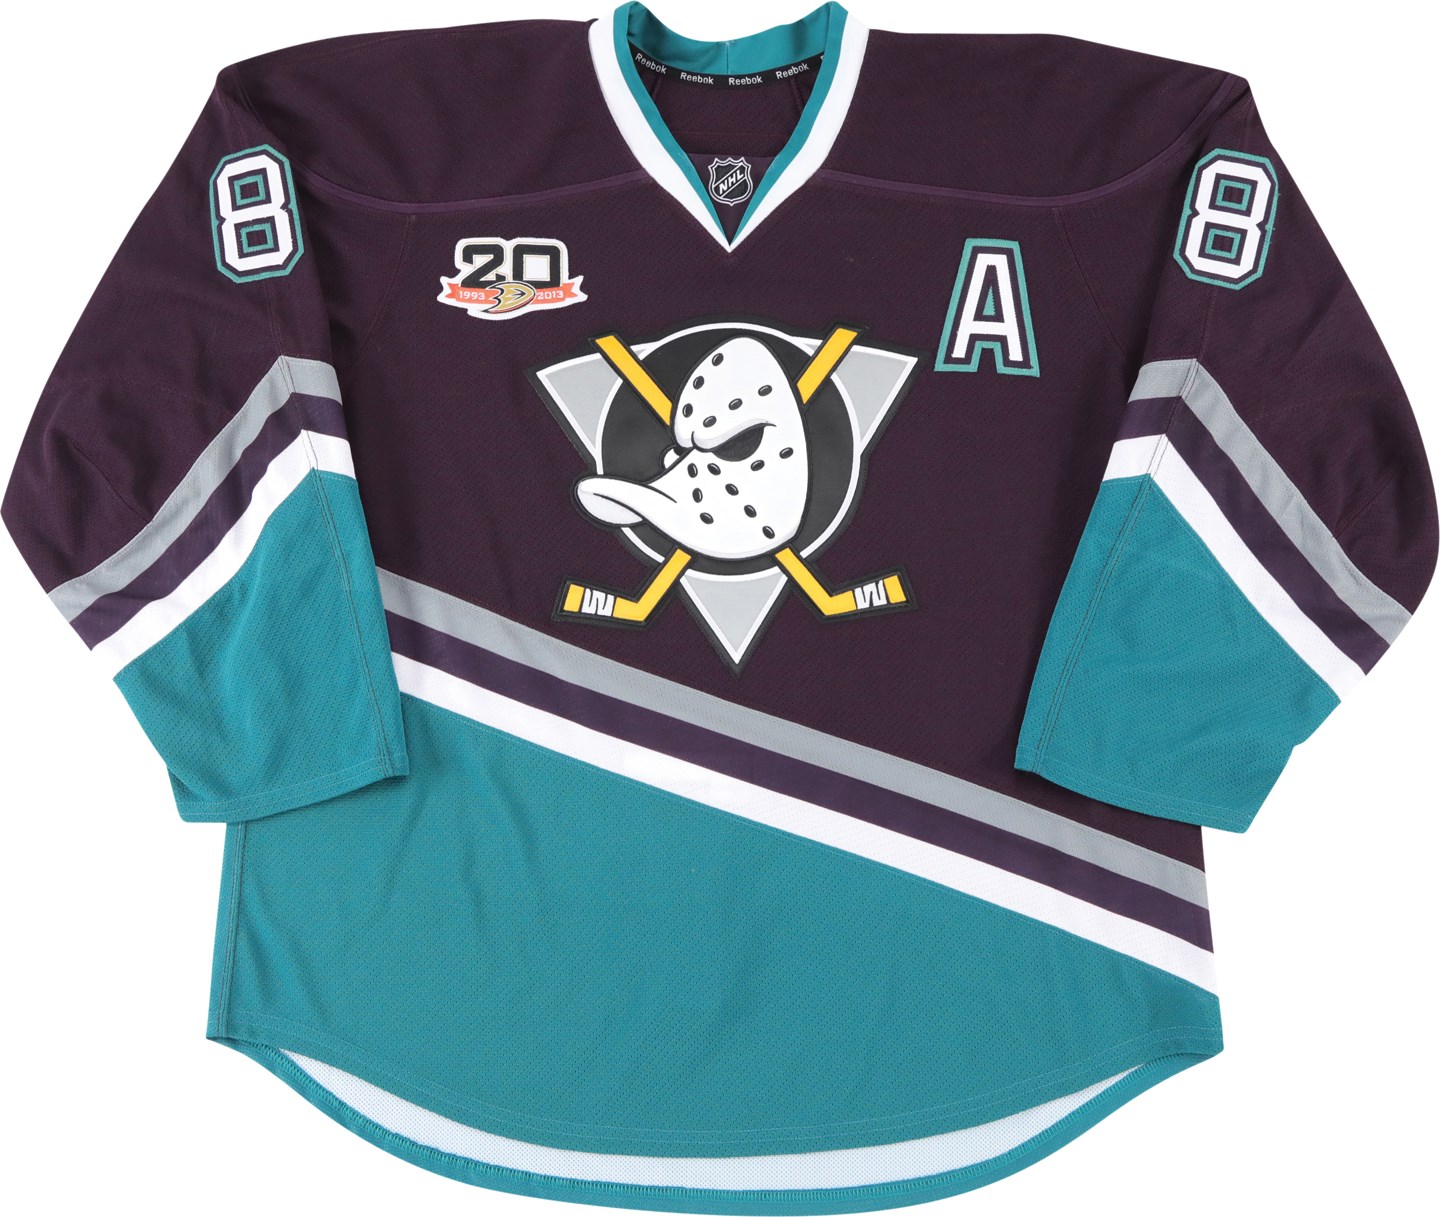 - 2013-14 Teemu Selanne Anaheim Ducks Signed Game Issued Jersey